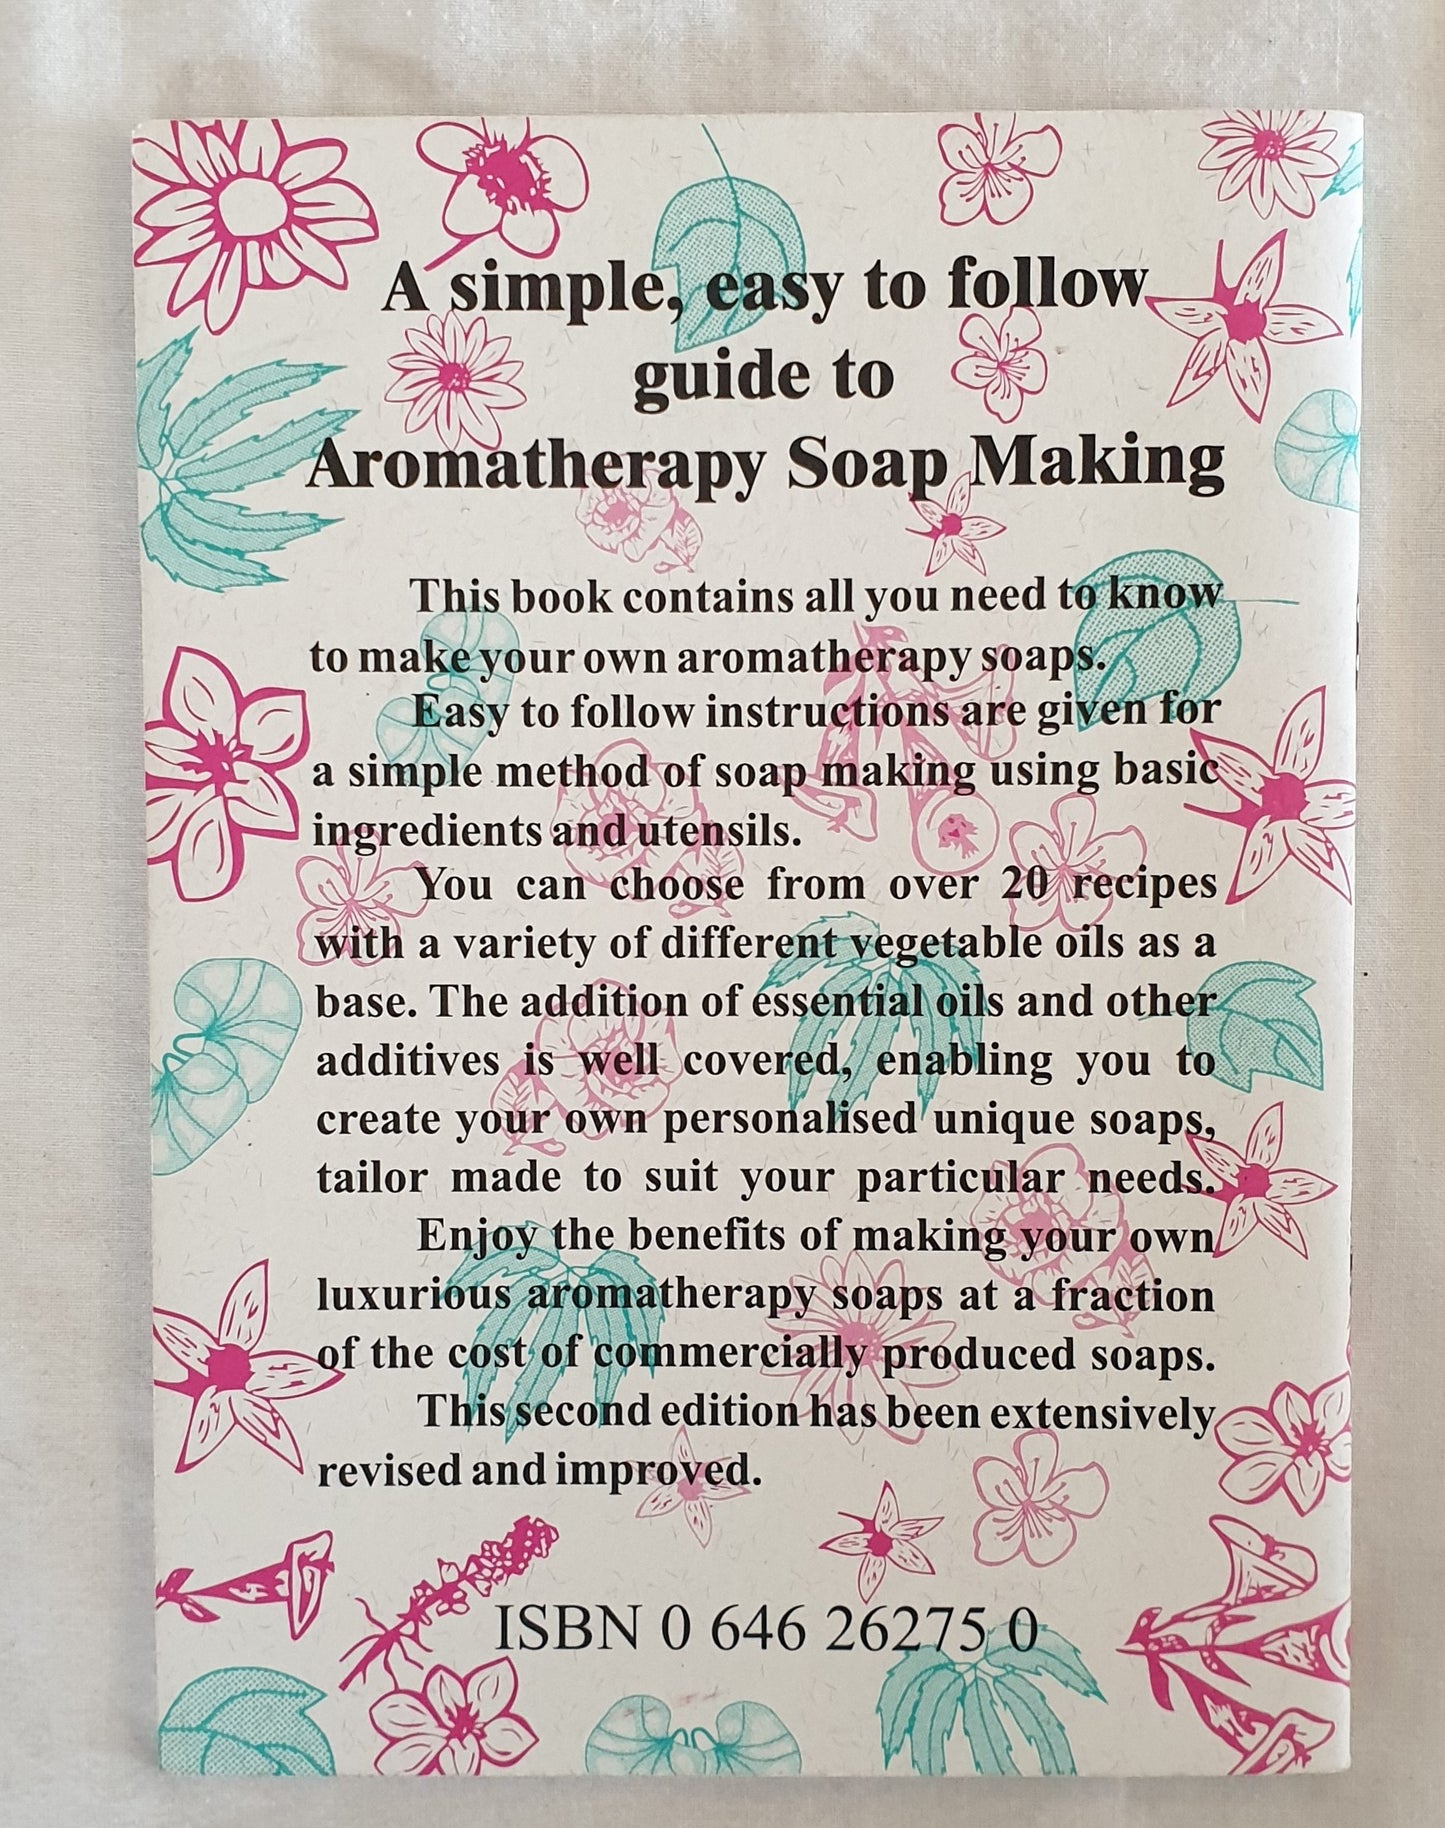 Aromatherapy Soap Making by Elizabeth M Wright